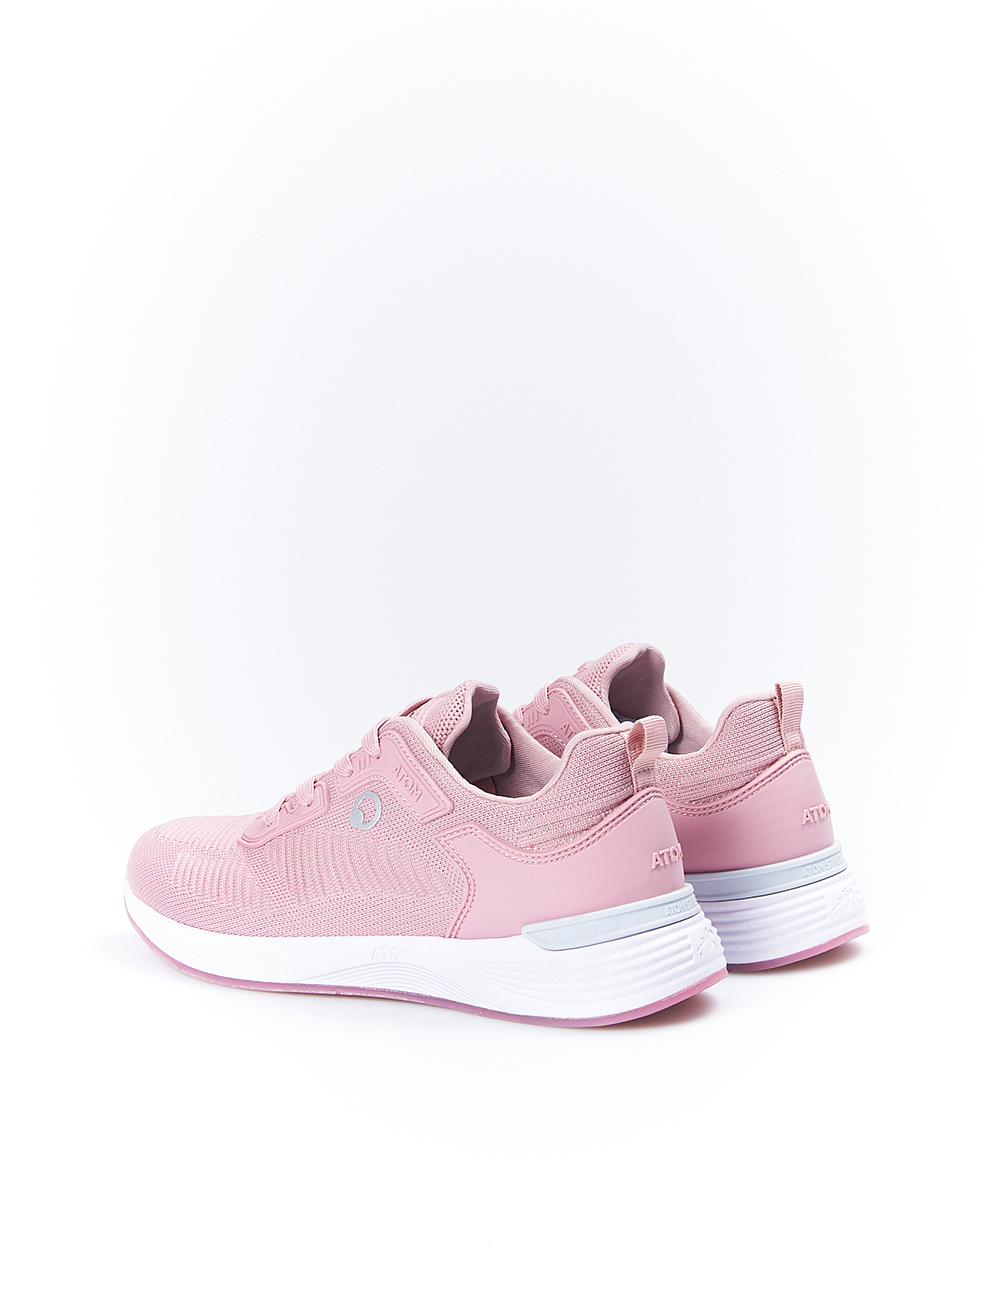 Zapatos Deportivos Atom By Fluchos At107 - Rosa - Sneakers Para Mujer  MKP